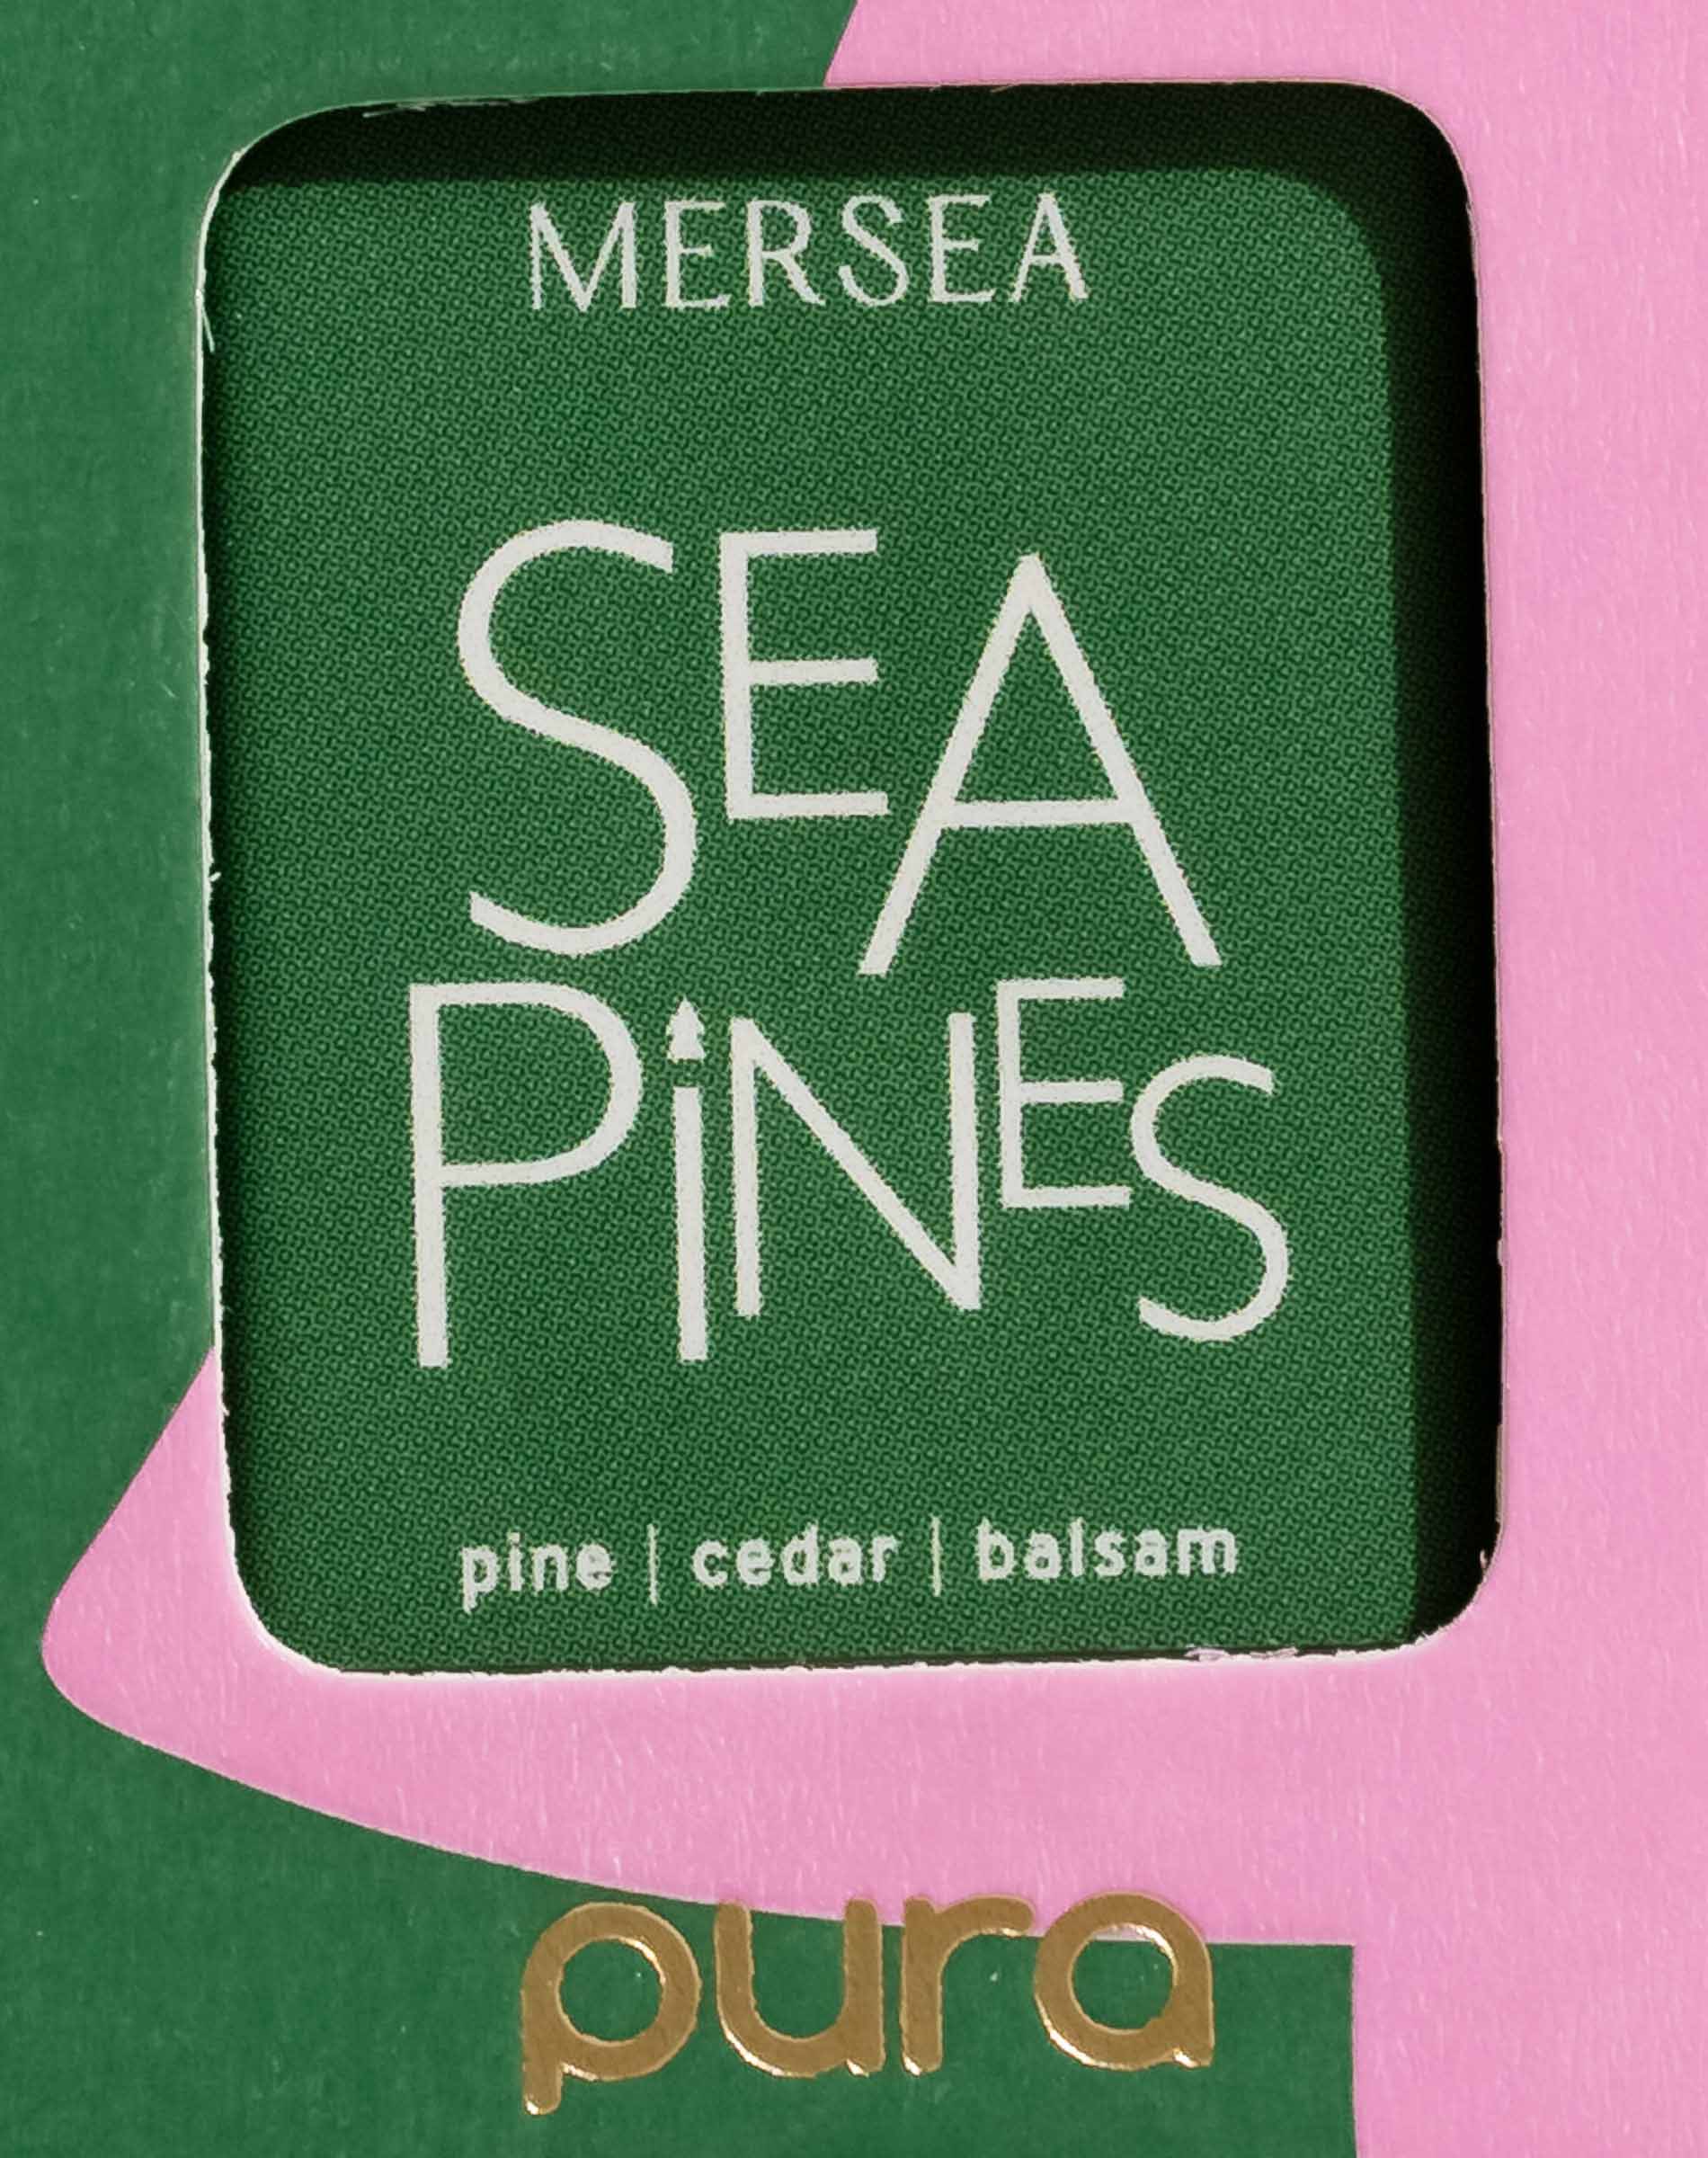 closeup of sea pines logo on boxed pura smart vial of mersea sea pines scent